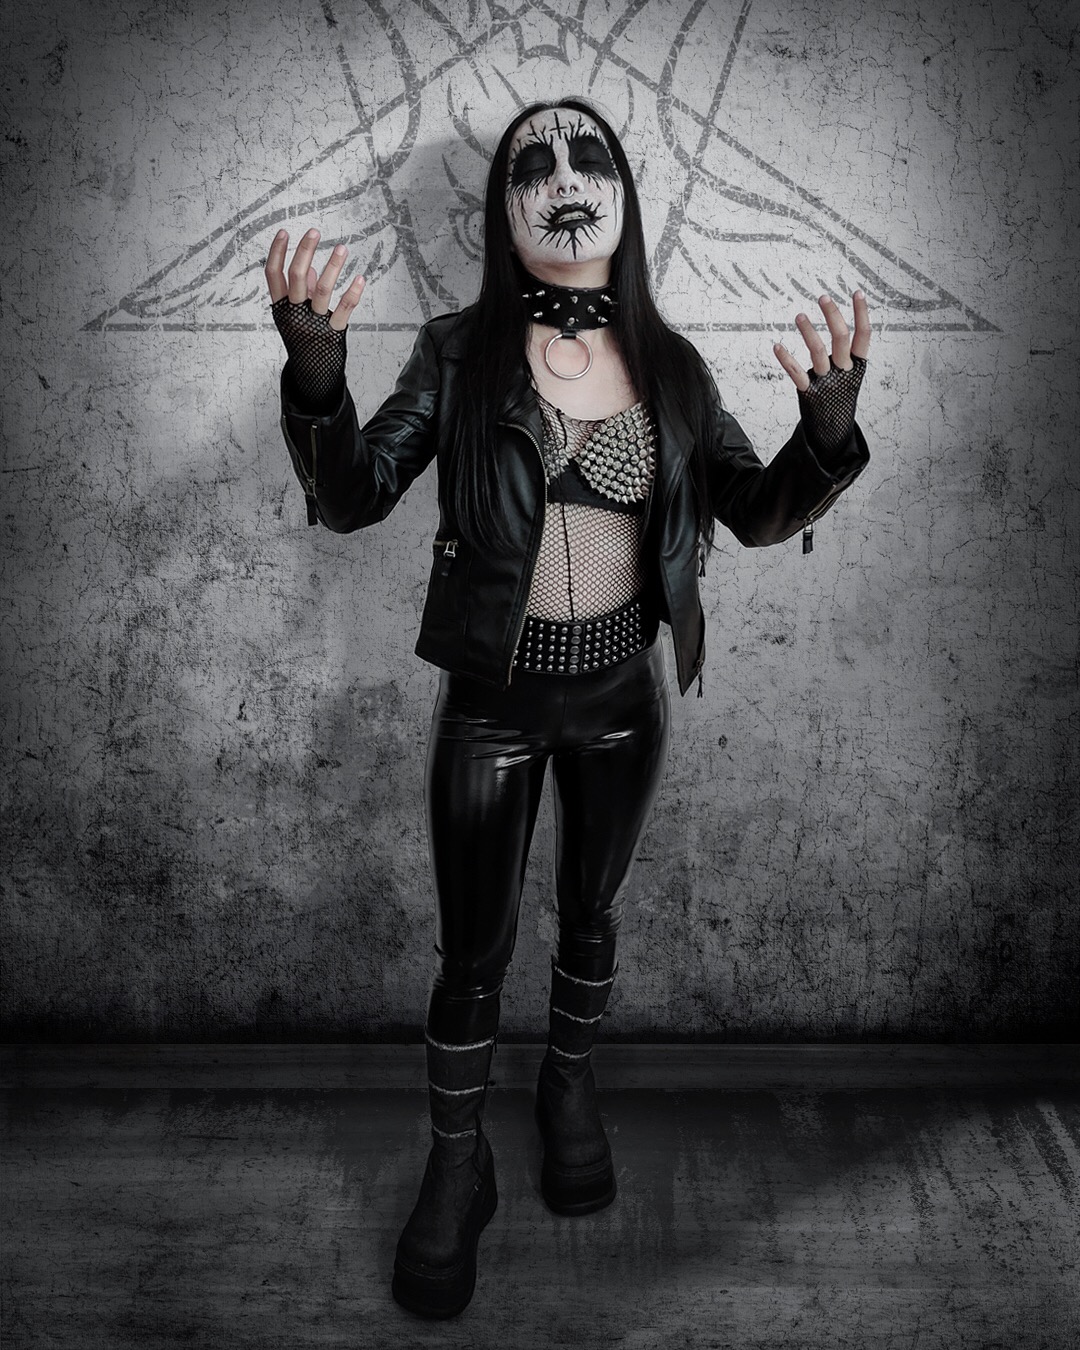 Corpse paint/black metal babe  Black metal girl, Black metal